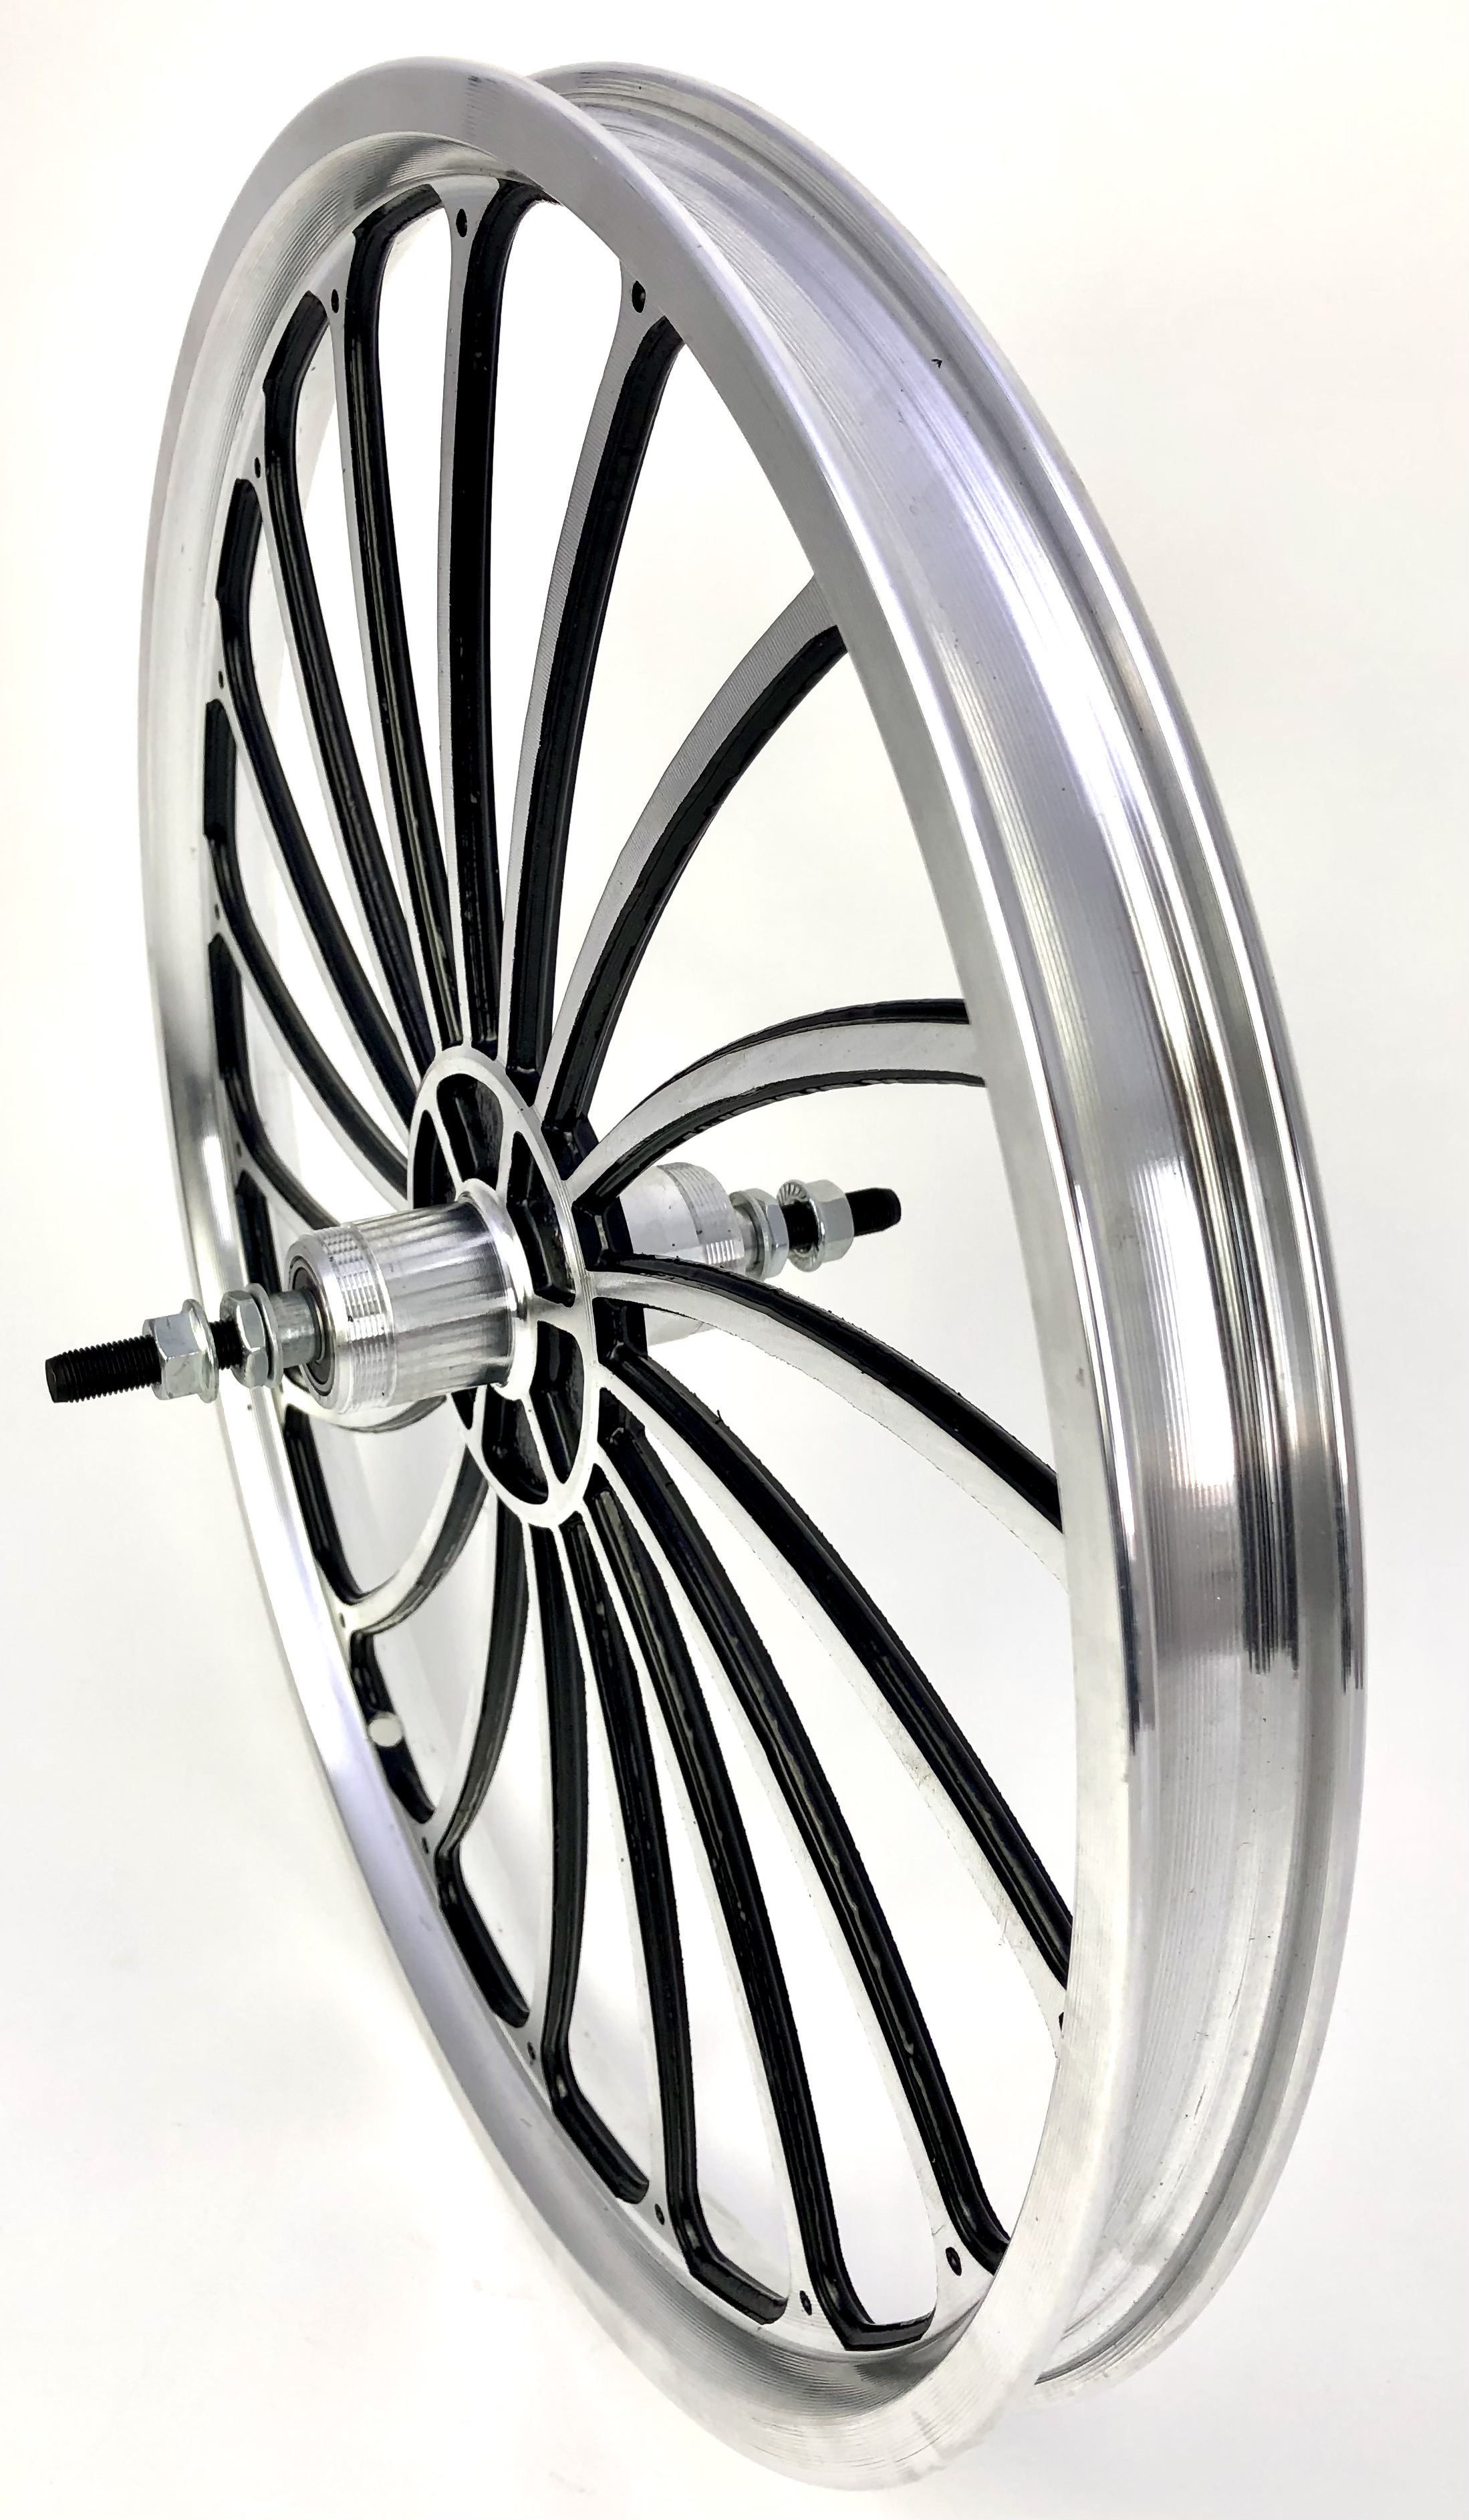 Rear Wheel OPC 20 inch Jet Engine black silver with Disk mount free wheel